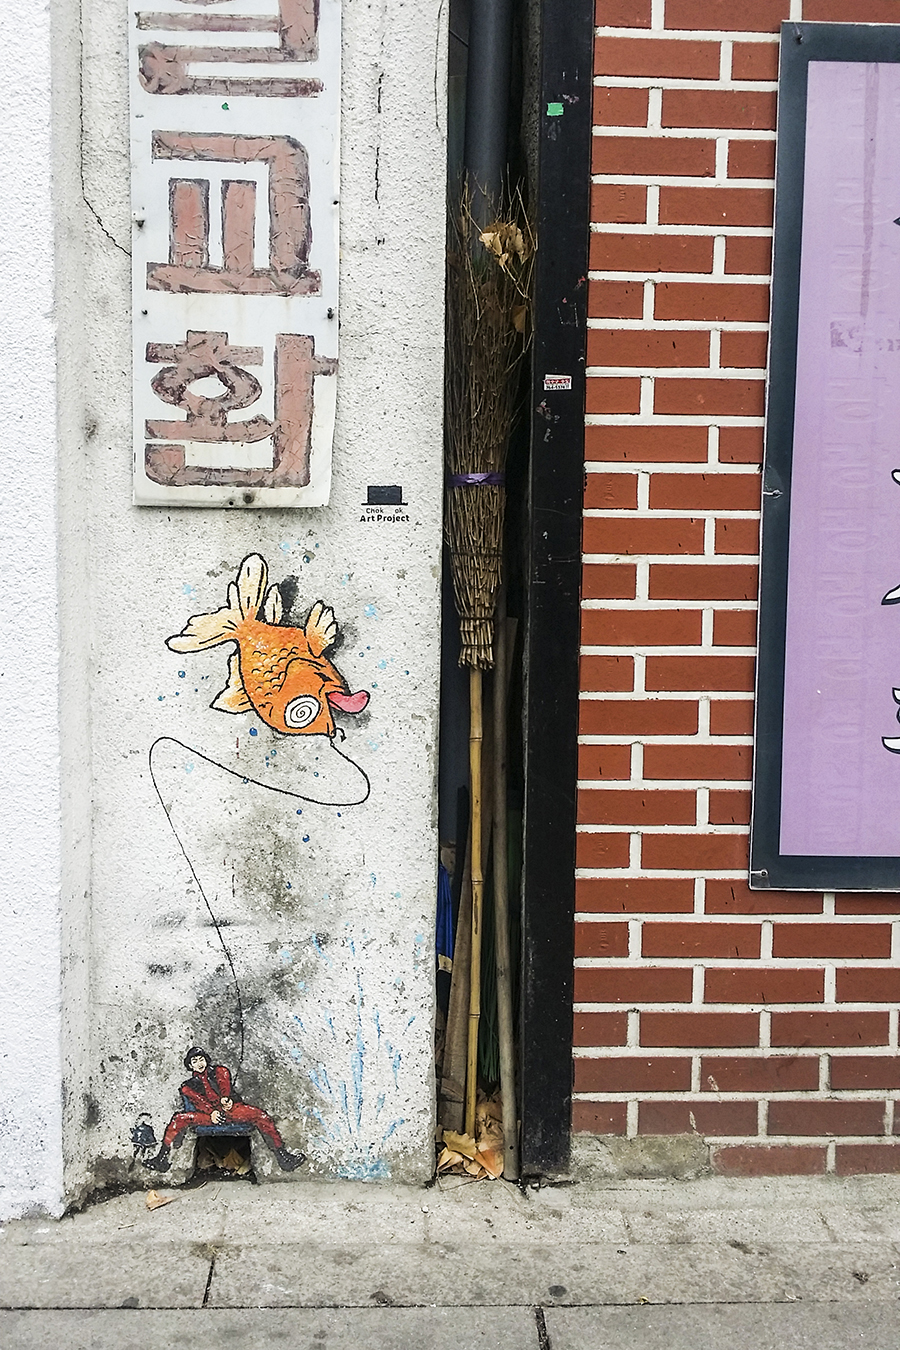 Cute art of a fisherman and fish  in Bukchon, South Korea.